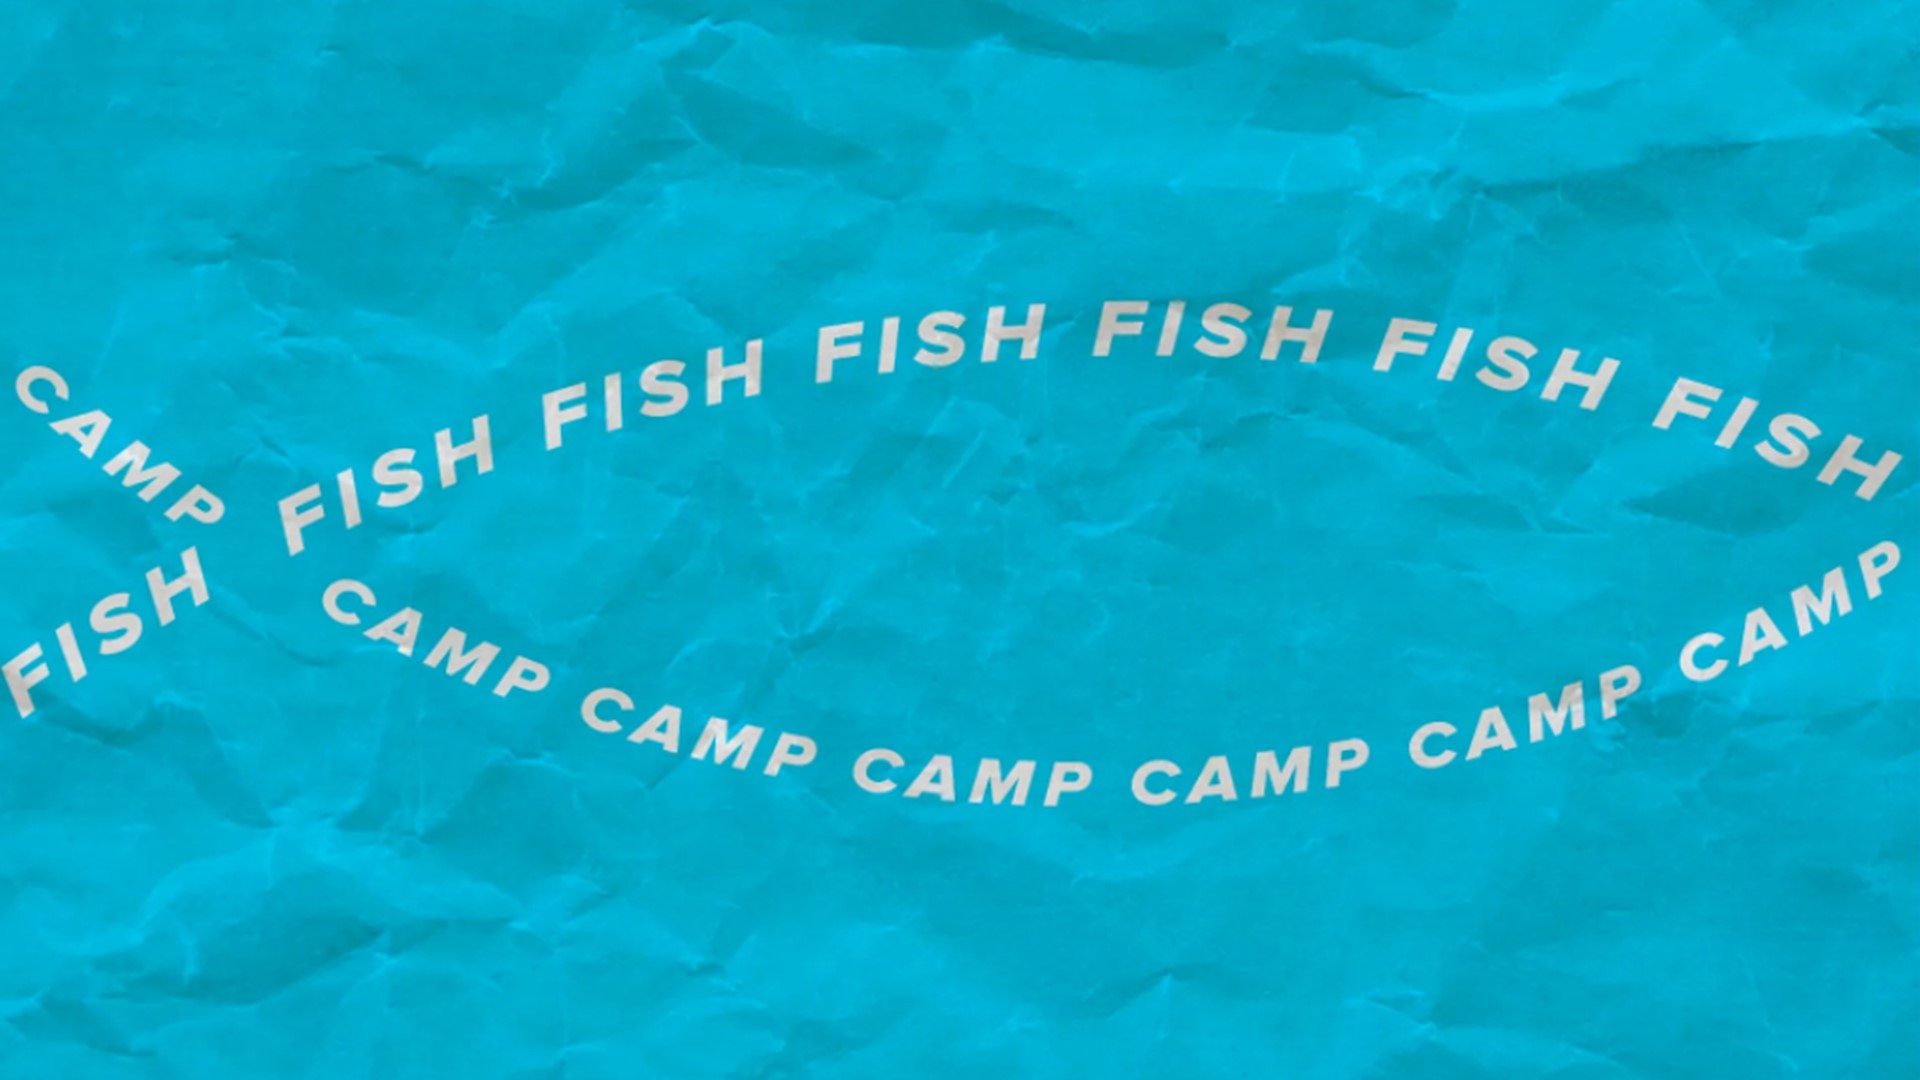 Fish Camp – West